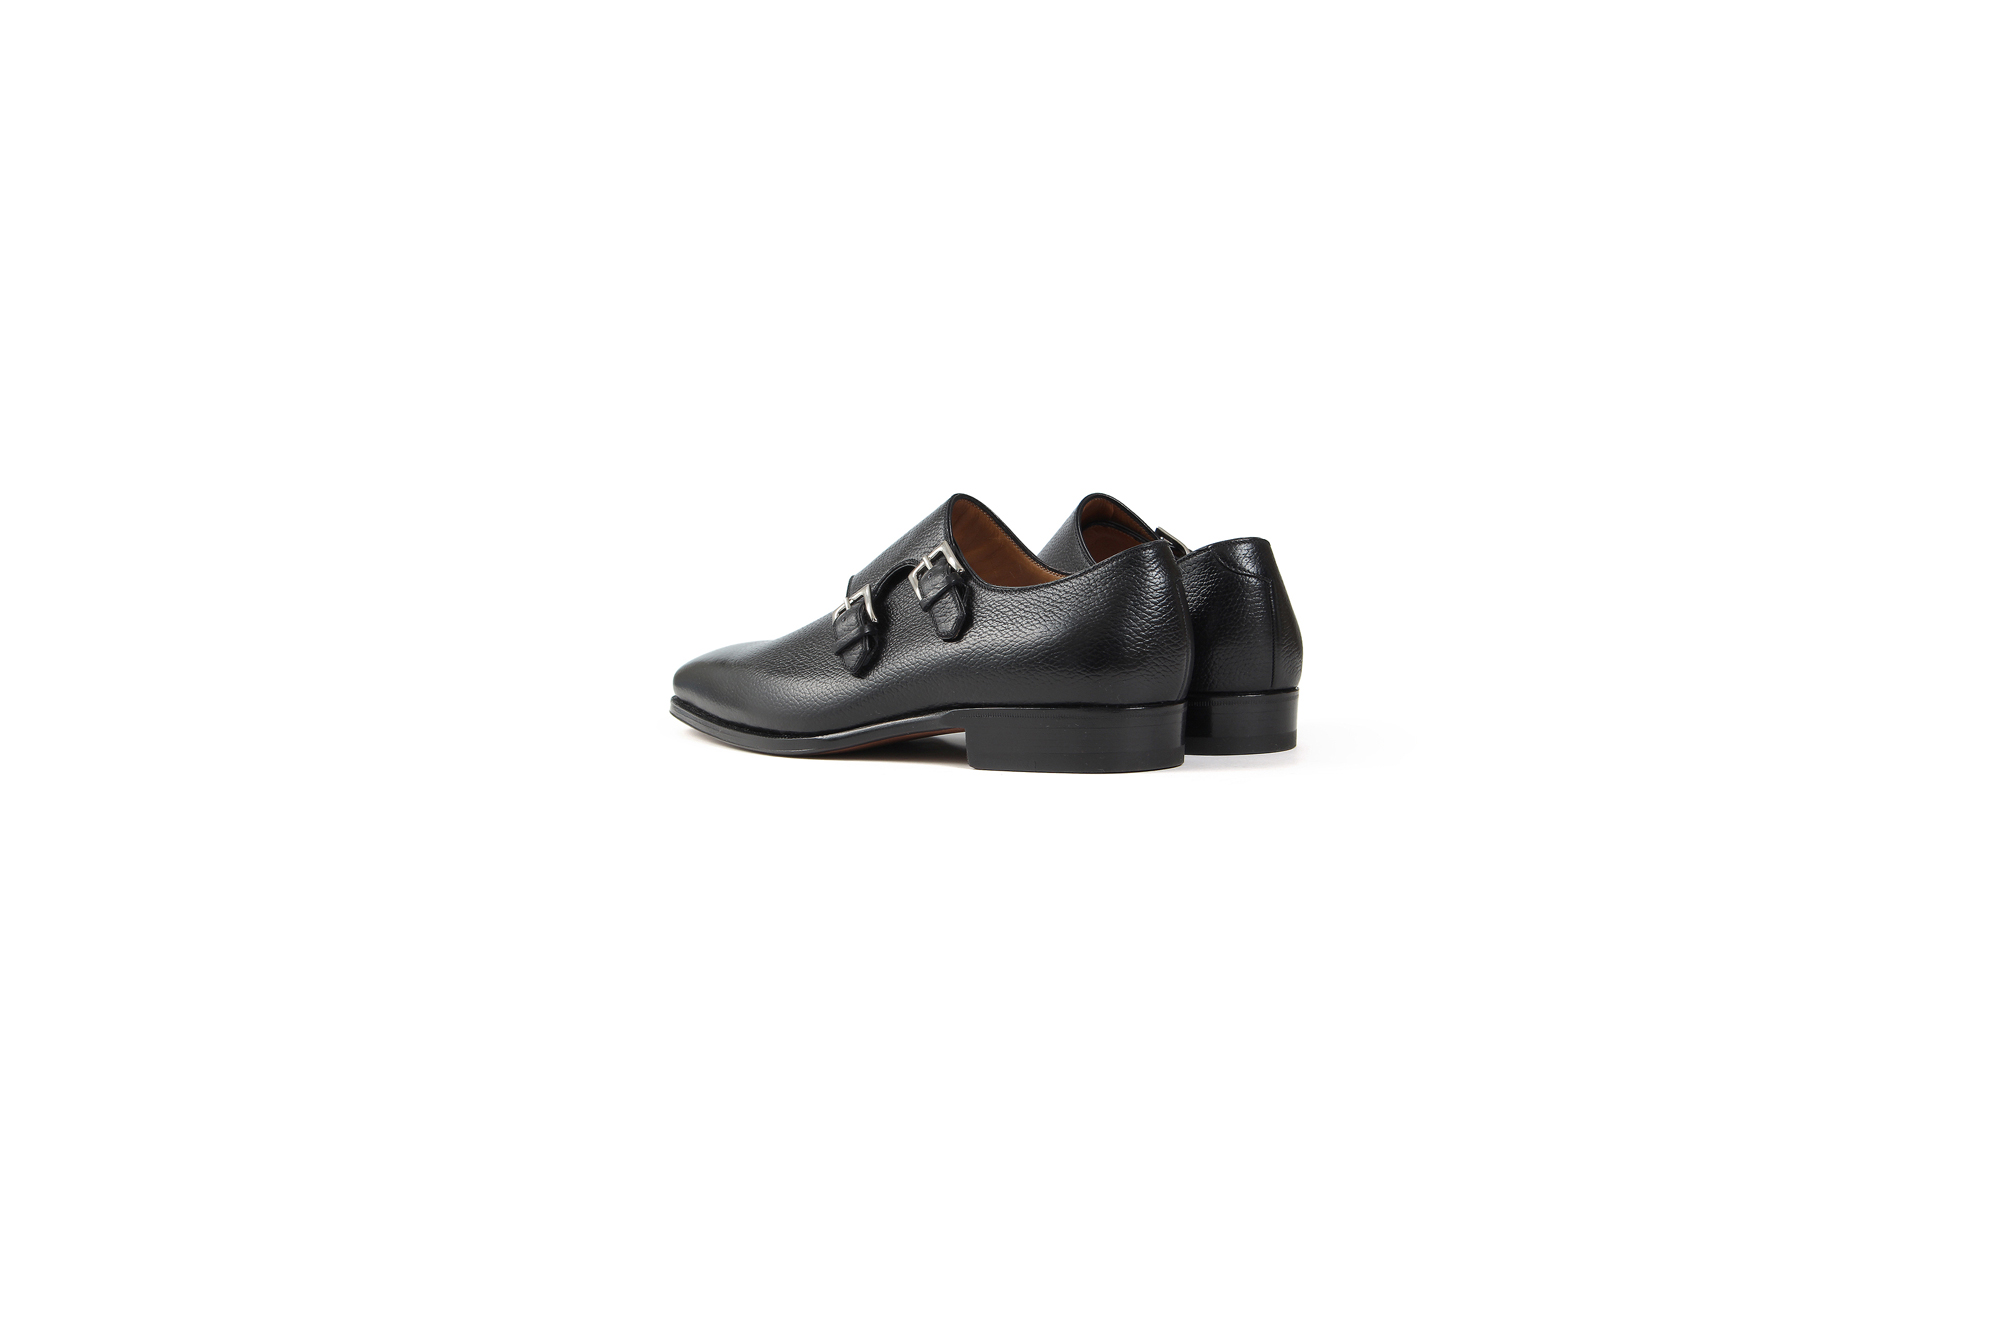 ENZO BONAFE(エンツォボナフェ) EB-36 Double Monk Strap Shoes INCA Leather ダブルモンクストラップシューズ NERO (ブラック) made in italy (イタリア製) 2020  enzobonafe eb36 エンツォボナフェ altoediritto アルトエデリット